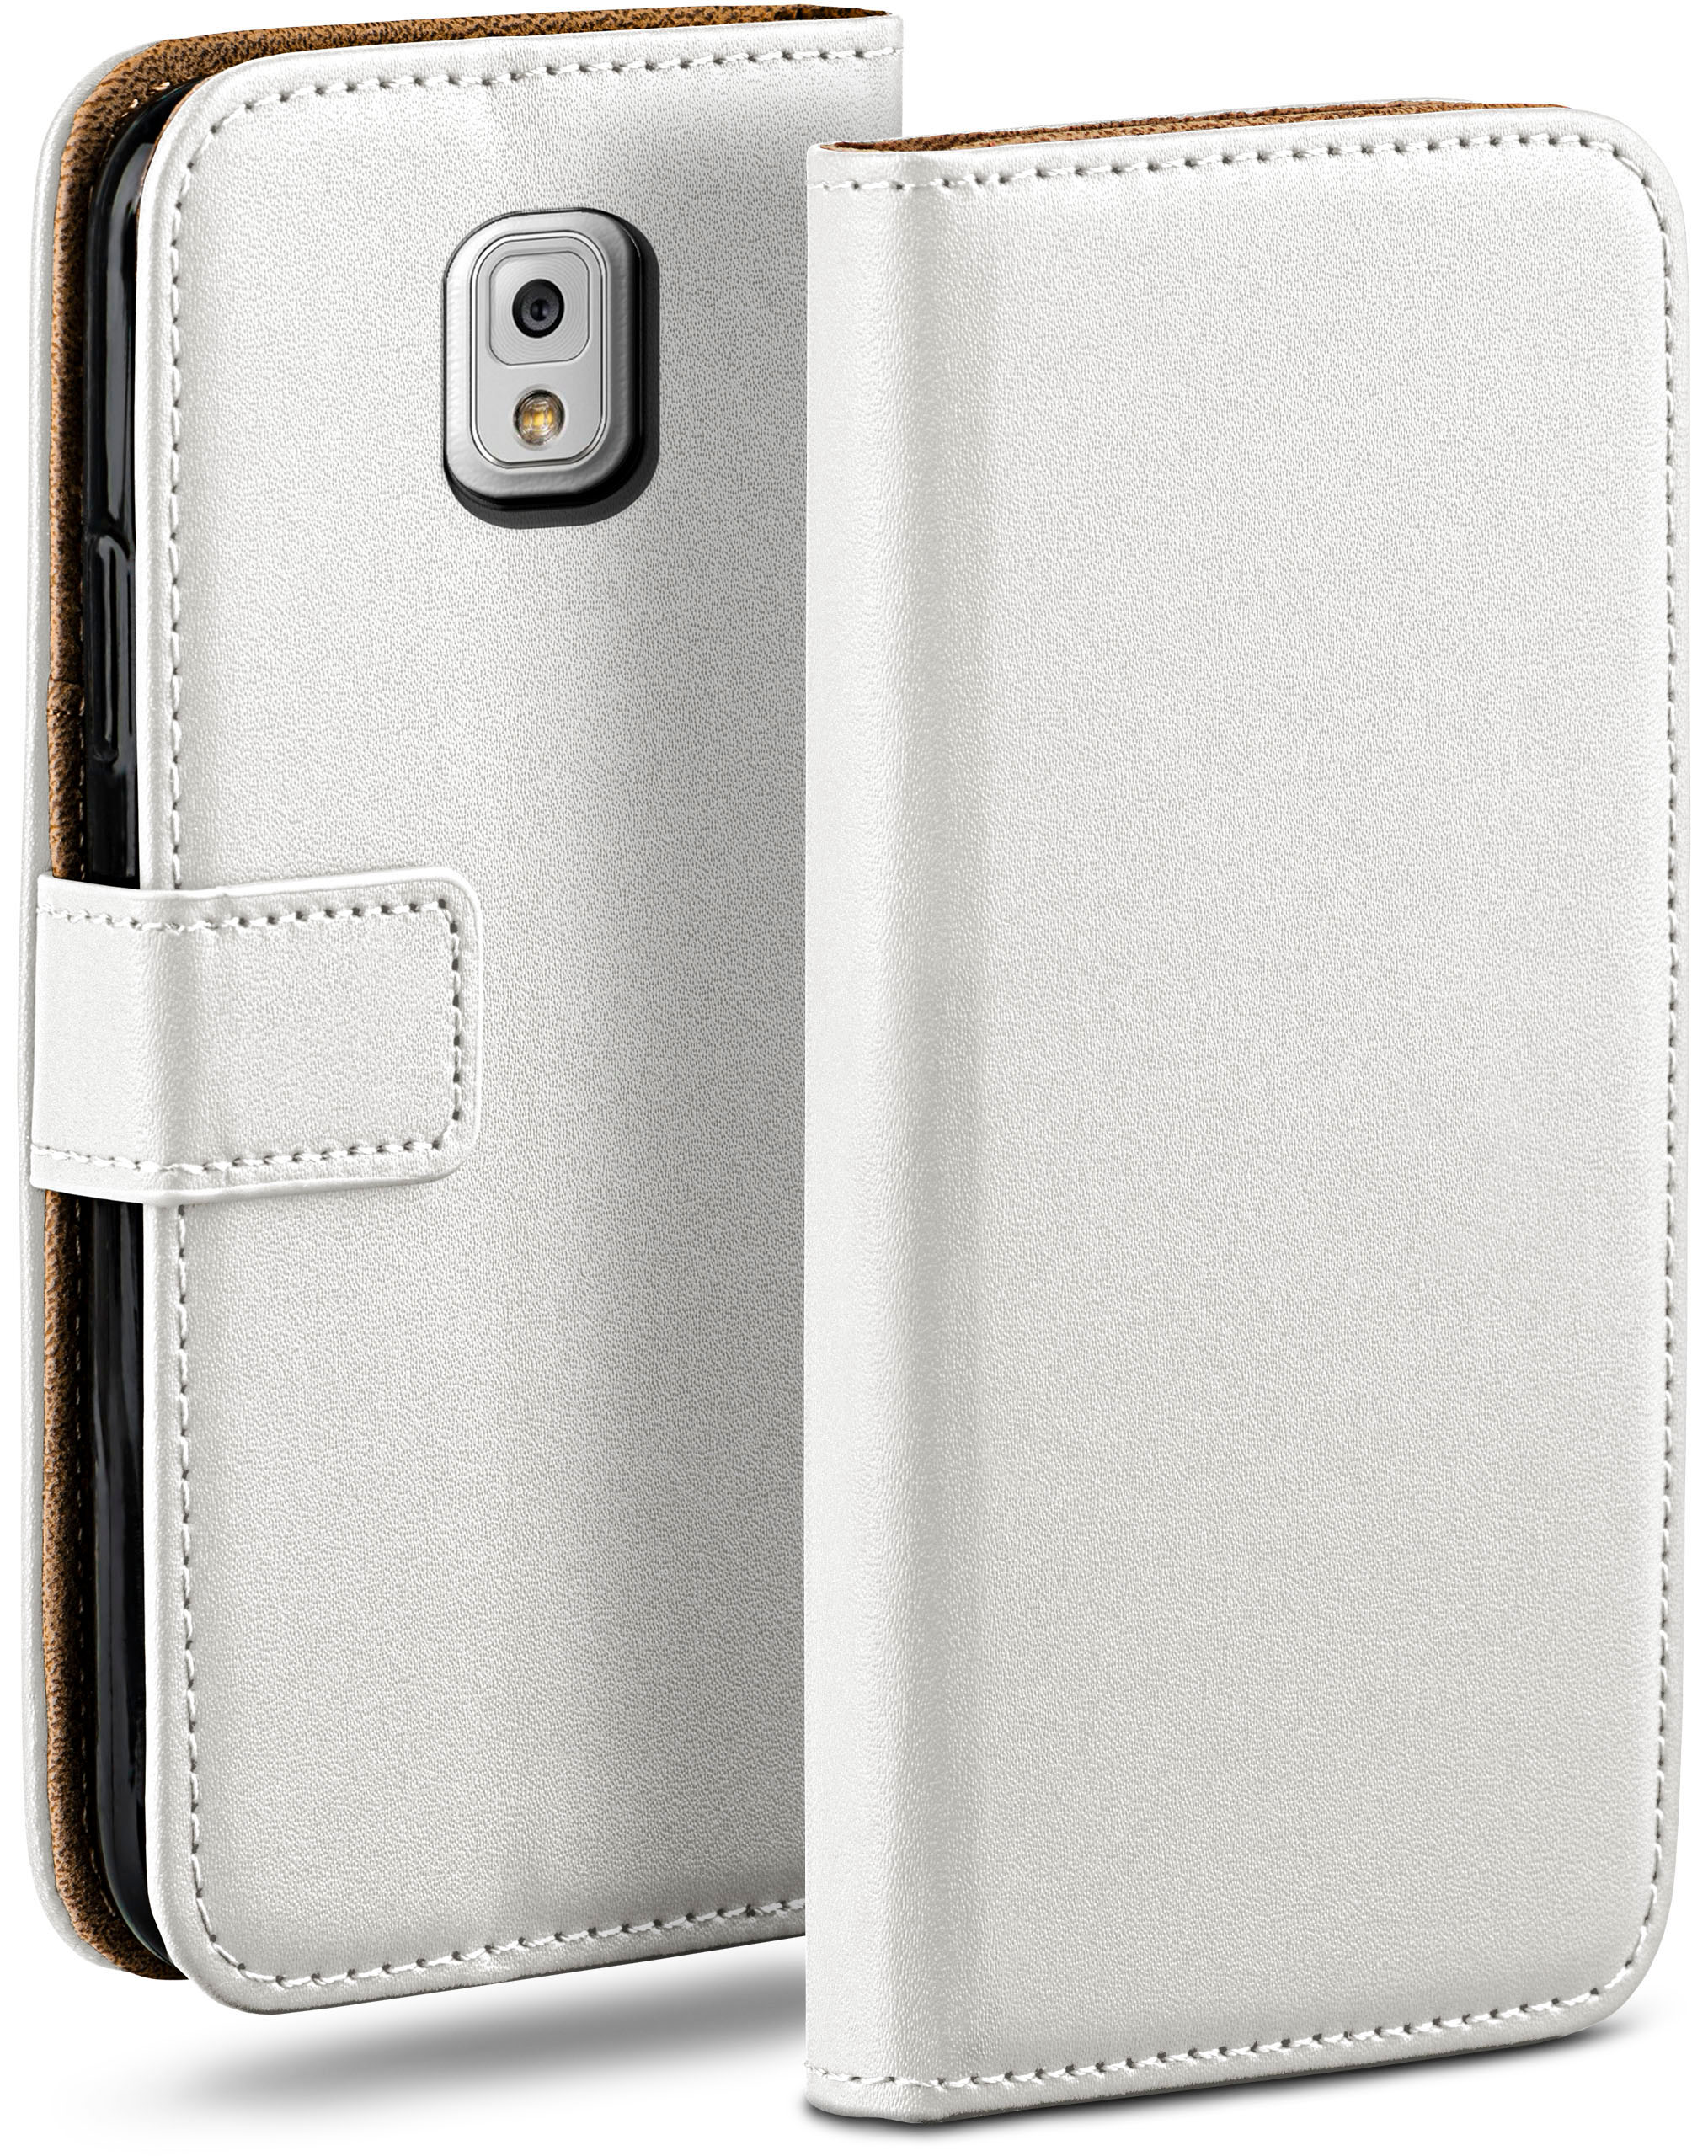 MOEX Book Samsung, Pearl-White Case, Galaxy Note 3, Bookcover